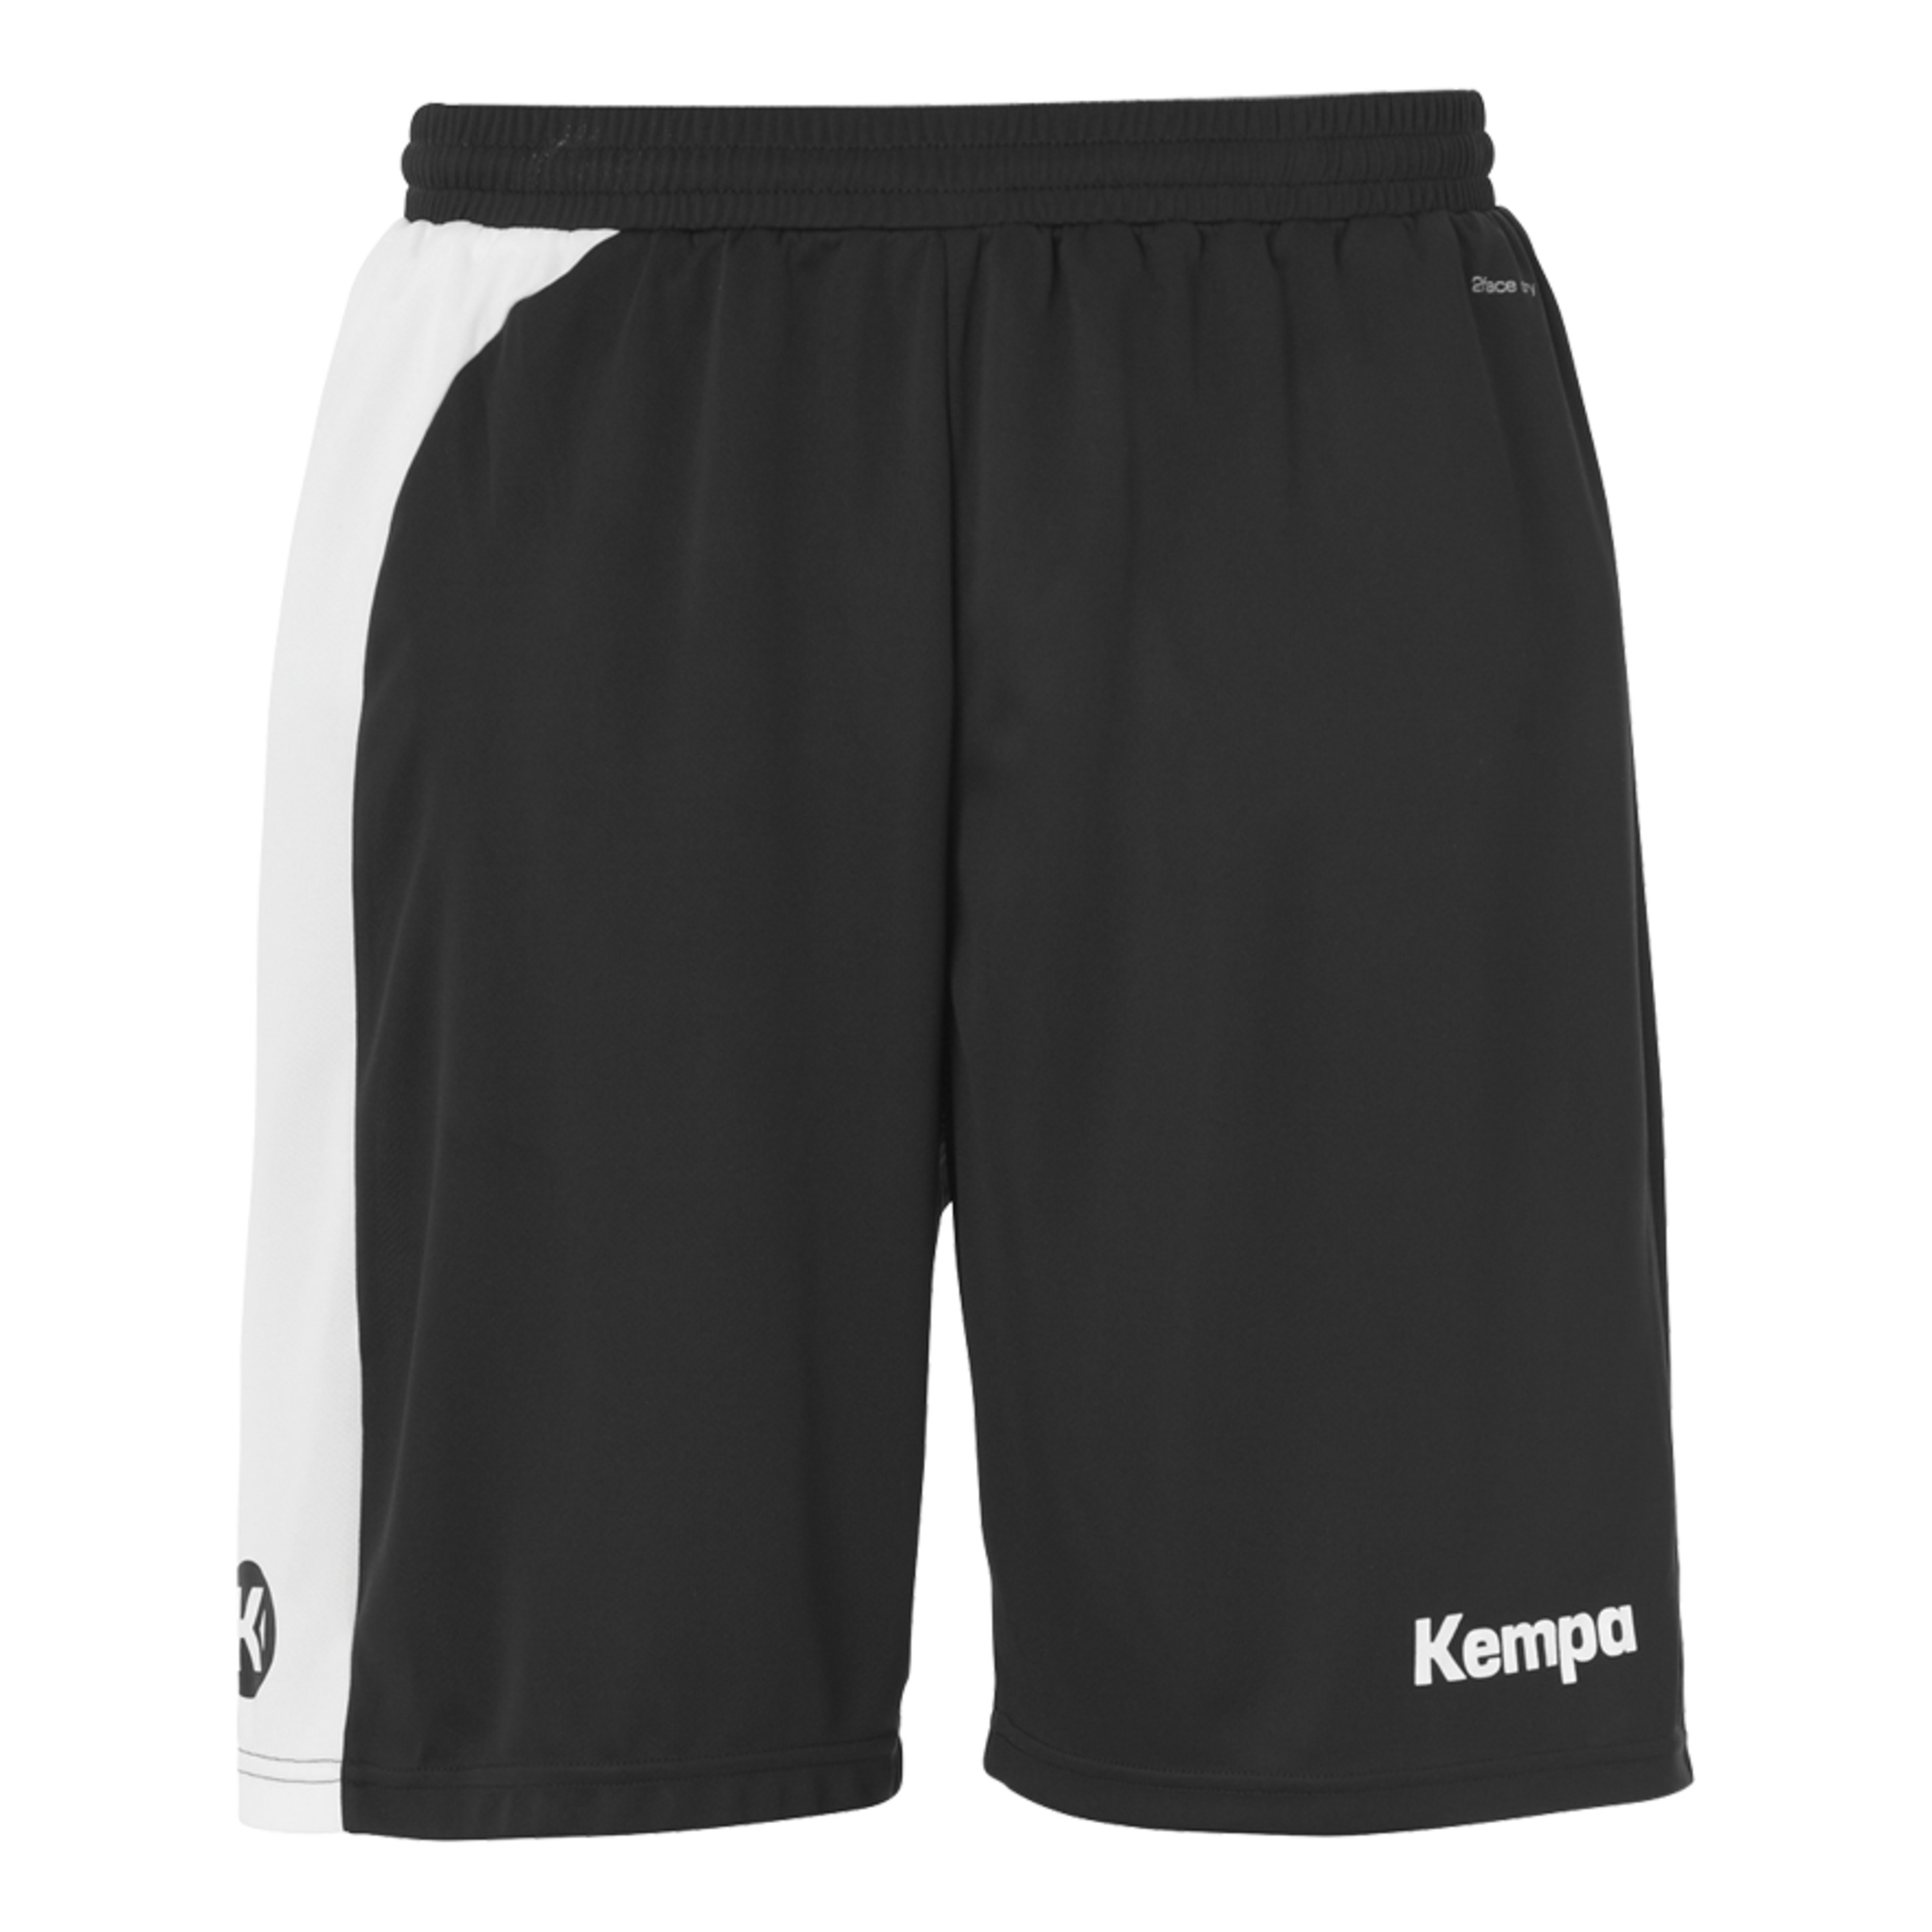 Peak Shorts Negro/blanco Kempa - negro_blanco - Peak Shorts Negro/blanco Kempa  MKP